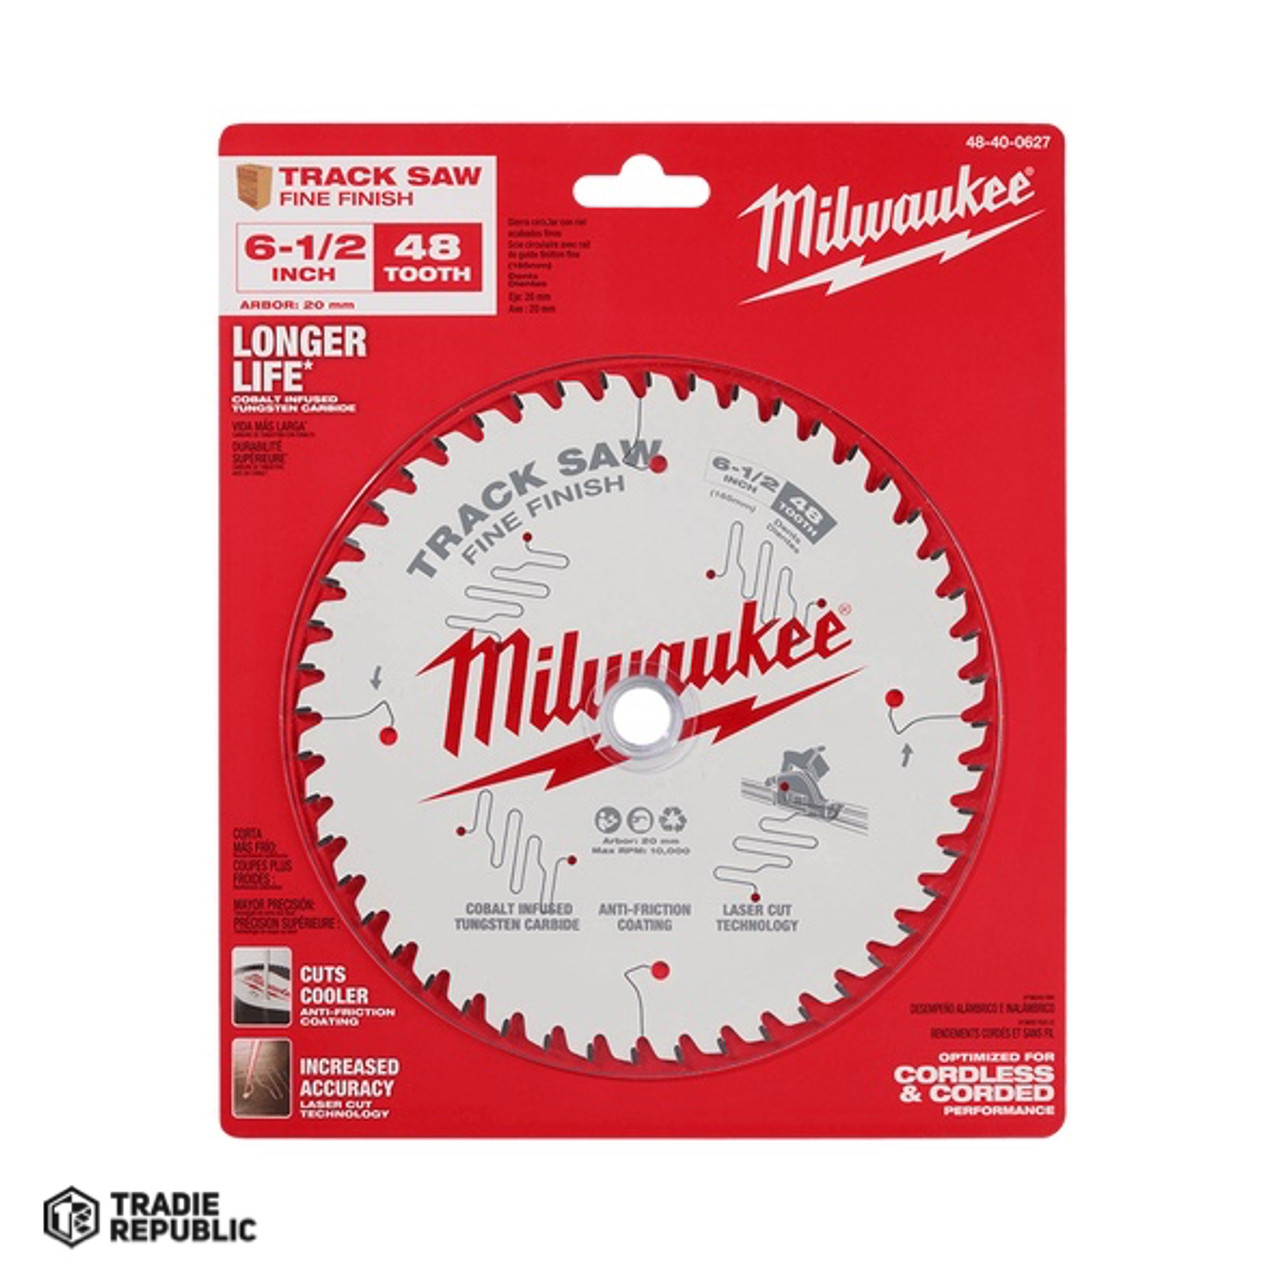 48400627 Milwaukee 165mm Fine Finish 48T Track Saw Blade